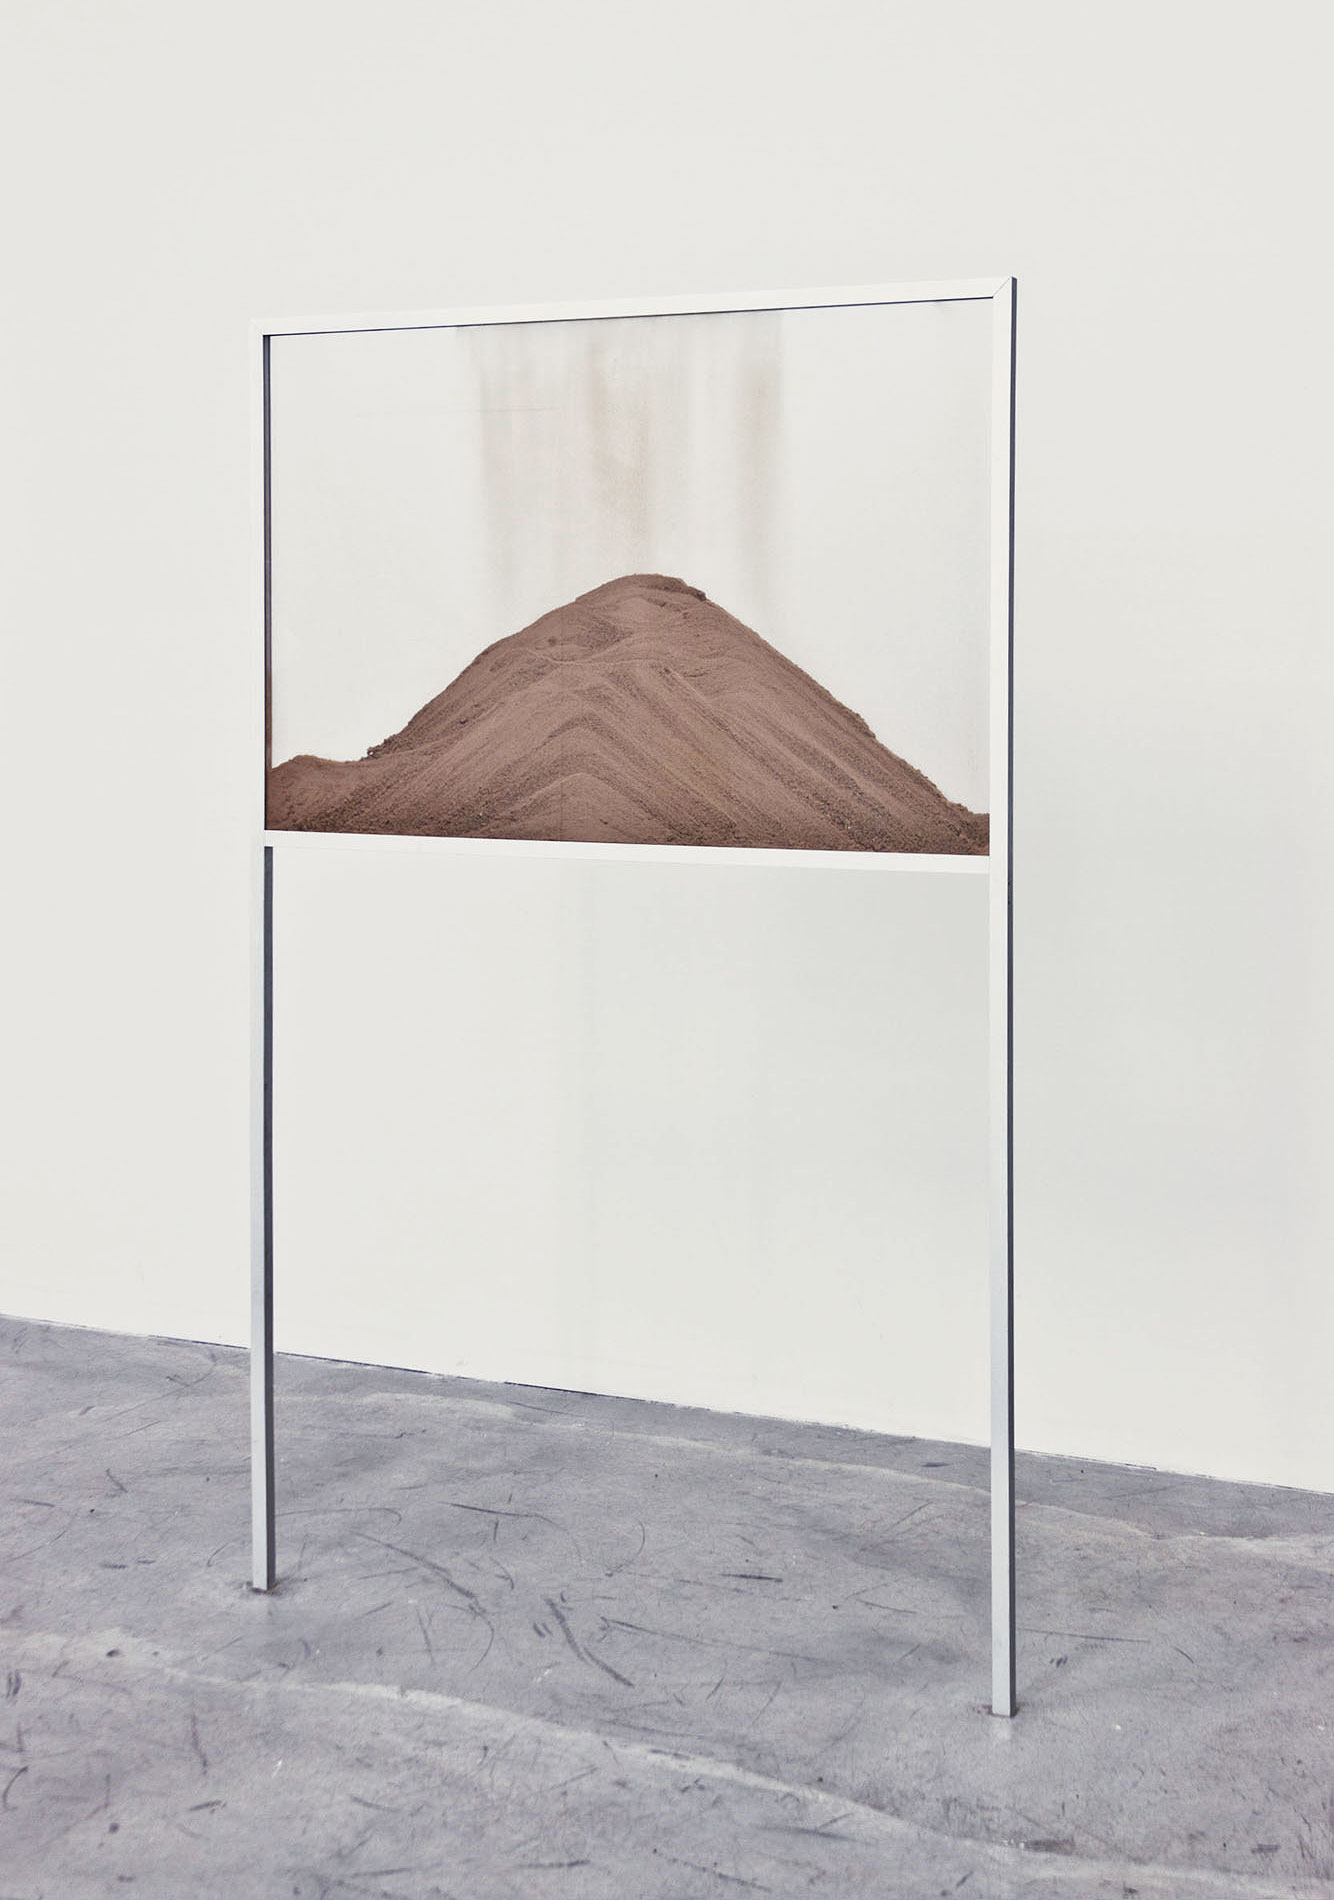 Nicholas Mangan, *A World Undone (Protolith)*, 2012, aluminium, glass, crushed zircon rock, 150 × 90 × 3 cm. Installation view, LABOR, Mexico, DF. Photographer: Isaac Contreras.